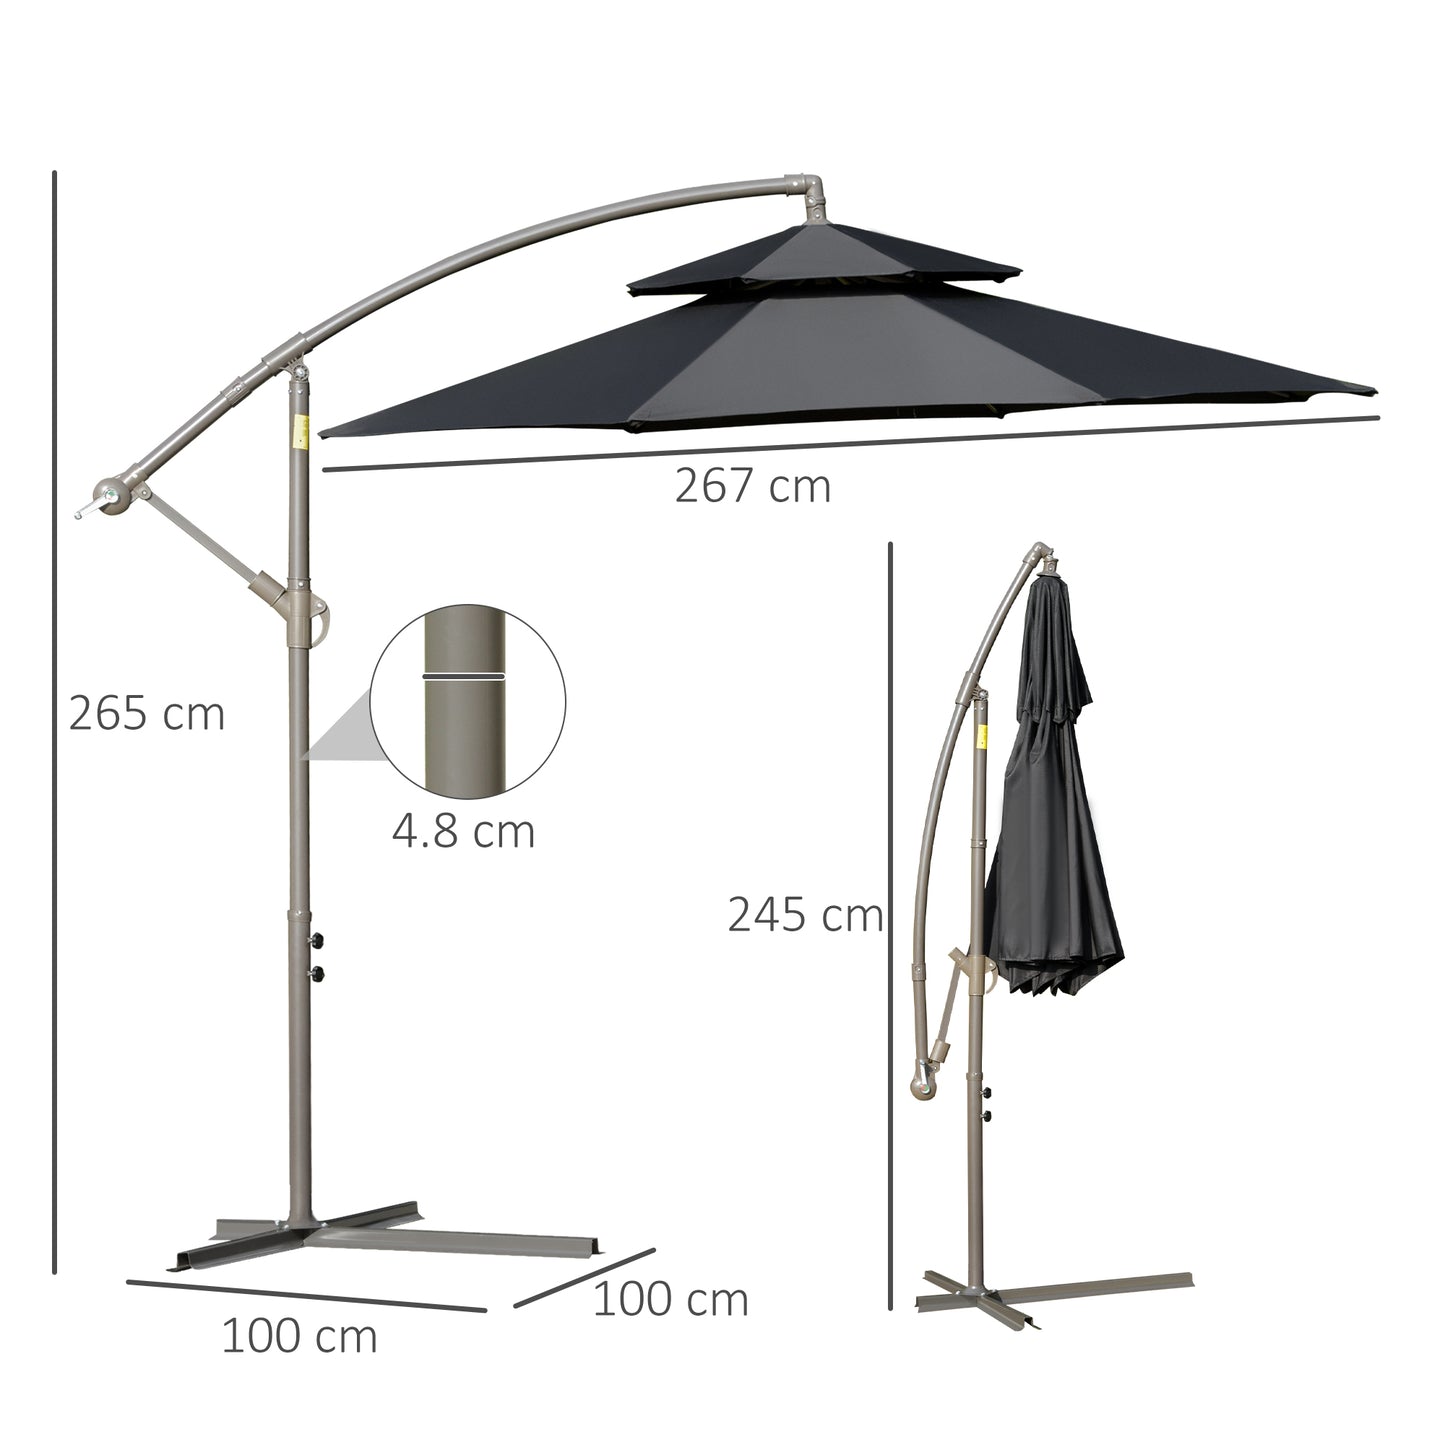 Outsunny 2.7m Garden Banana Parasol Cantilever Umbrella with Crank Handle, Double Tier Canopy and Cross Base for Outdoor, Hanging Sun Shade, Black w/ Canopy, Crank,